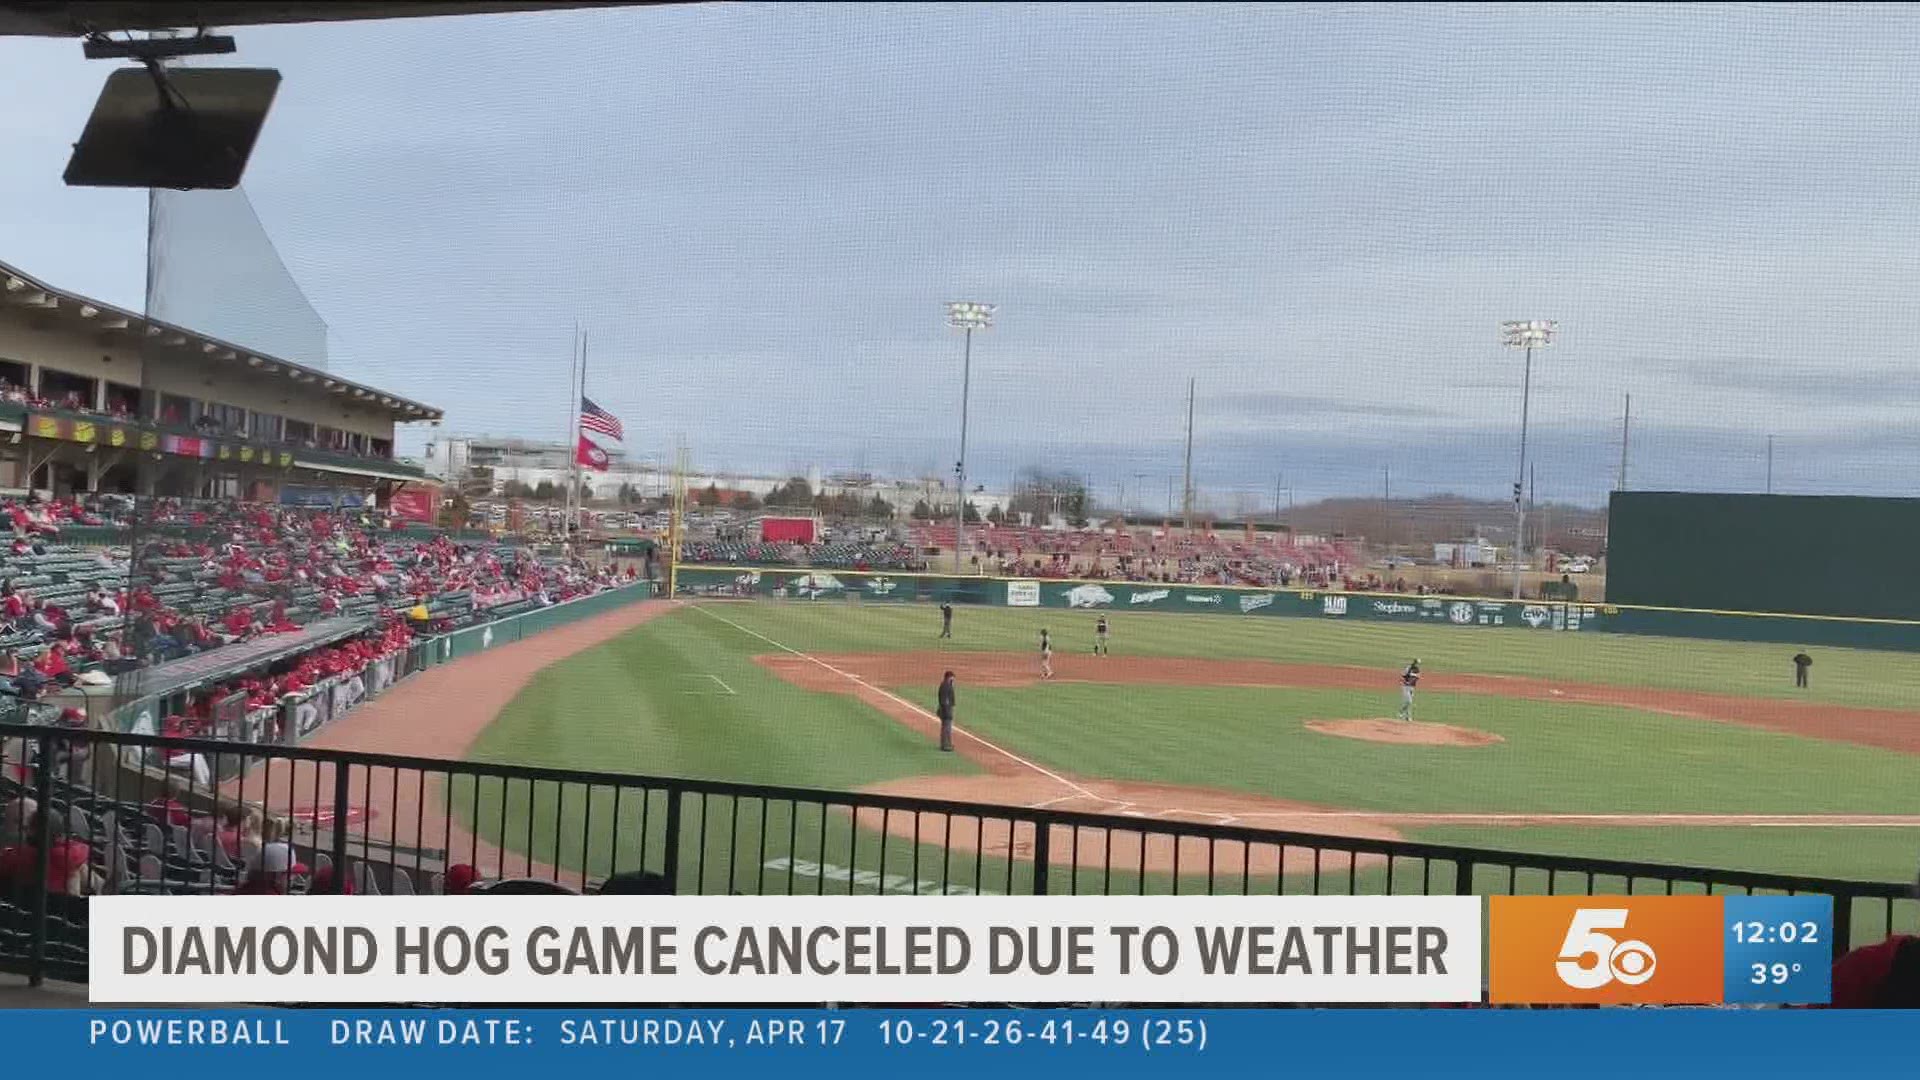 Tuesdays Razorback baseball game canceled due to inclement weather 5newsonline